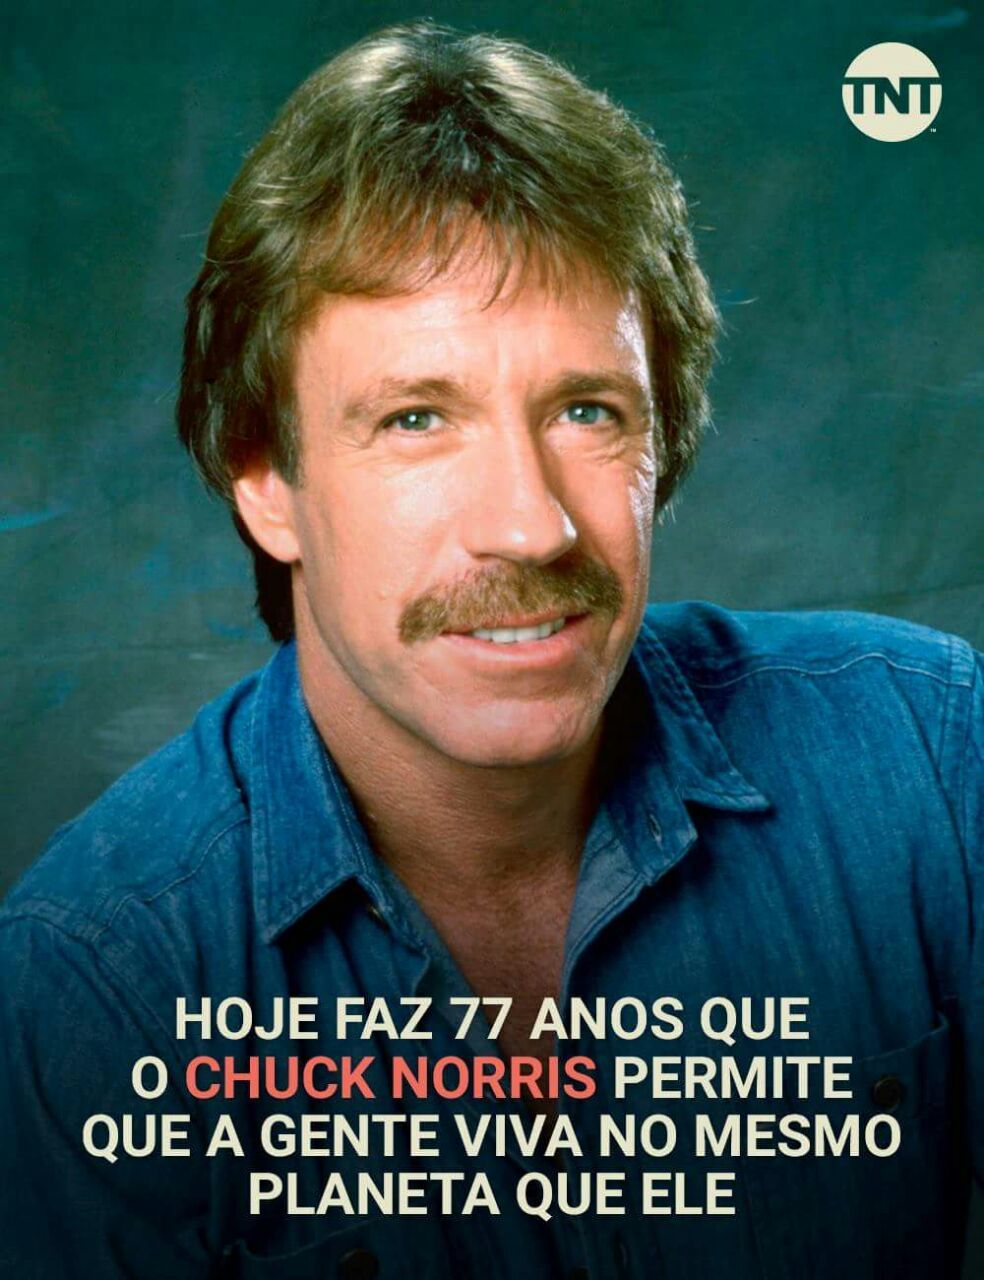 Vida longa ao Chuck Norris! - meme